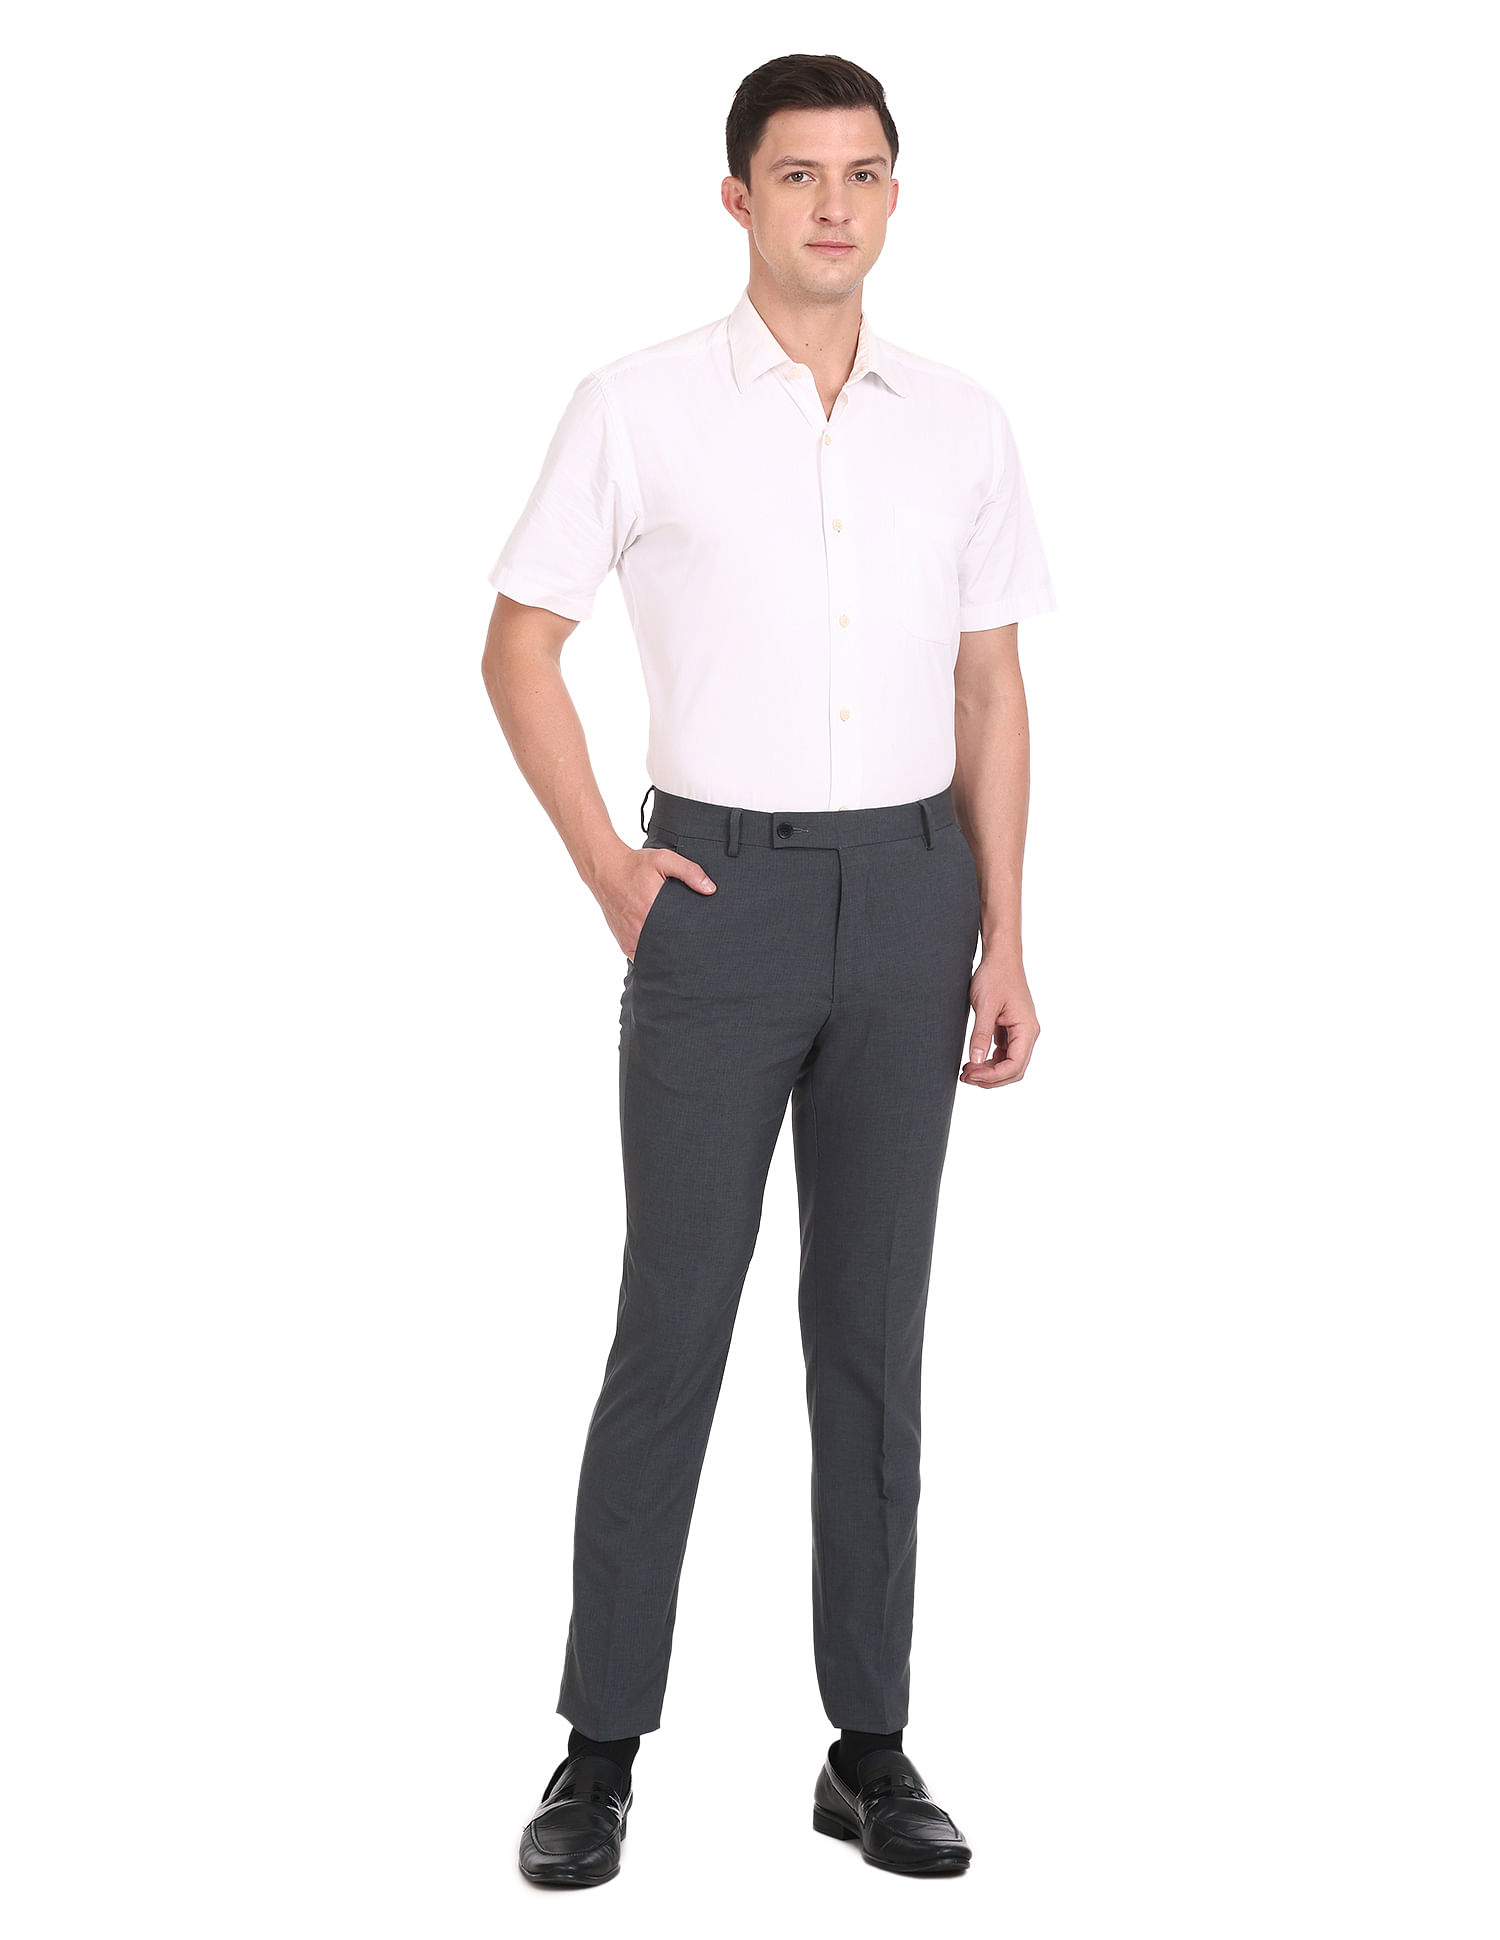 Classic Polo Men's 100% Cotton Moderate Fit Solid Beige Color Trouser